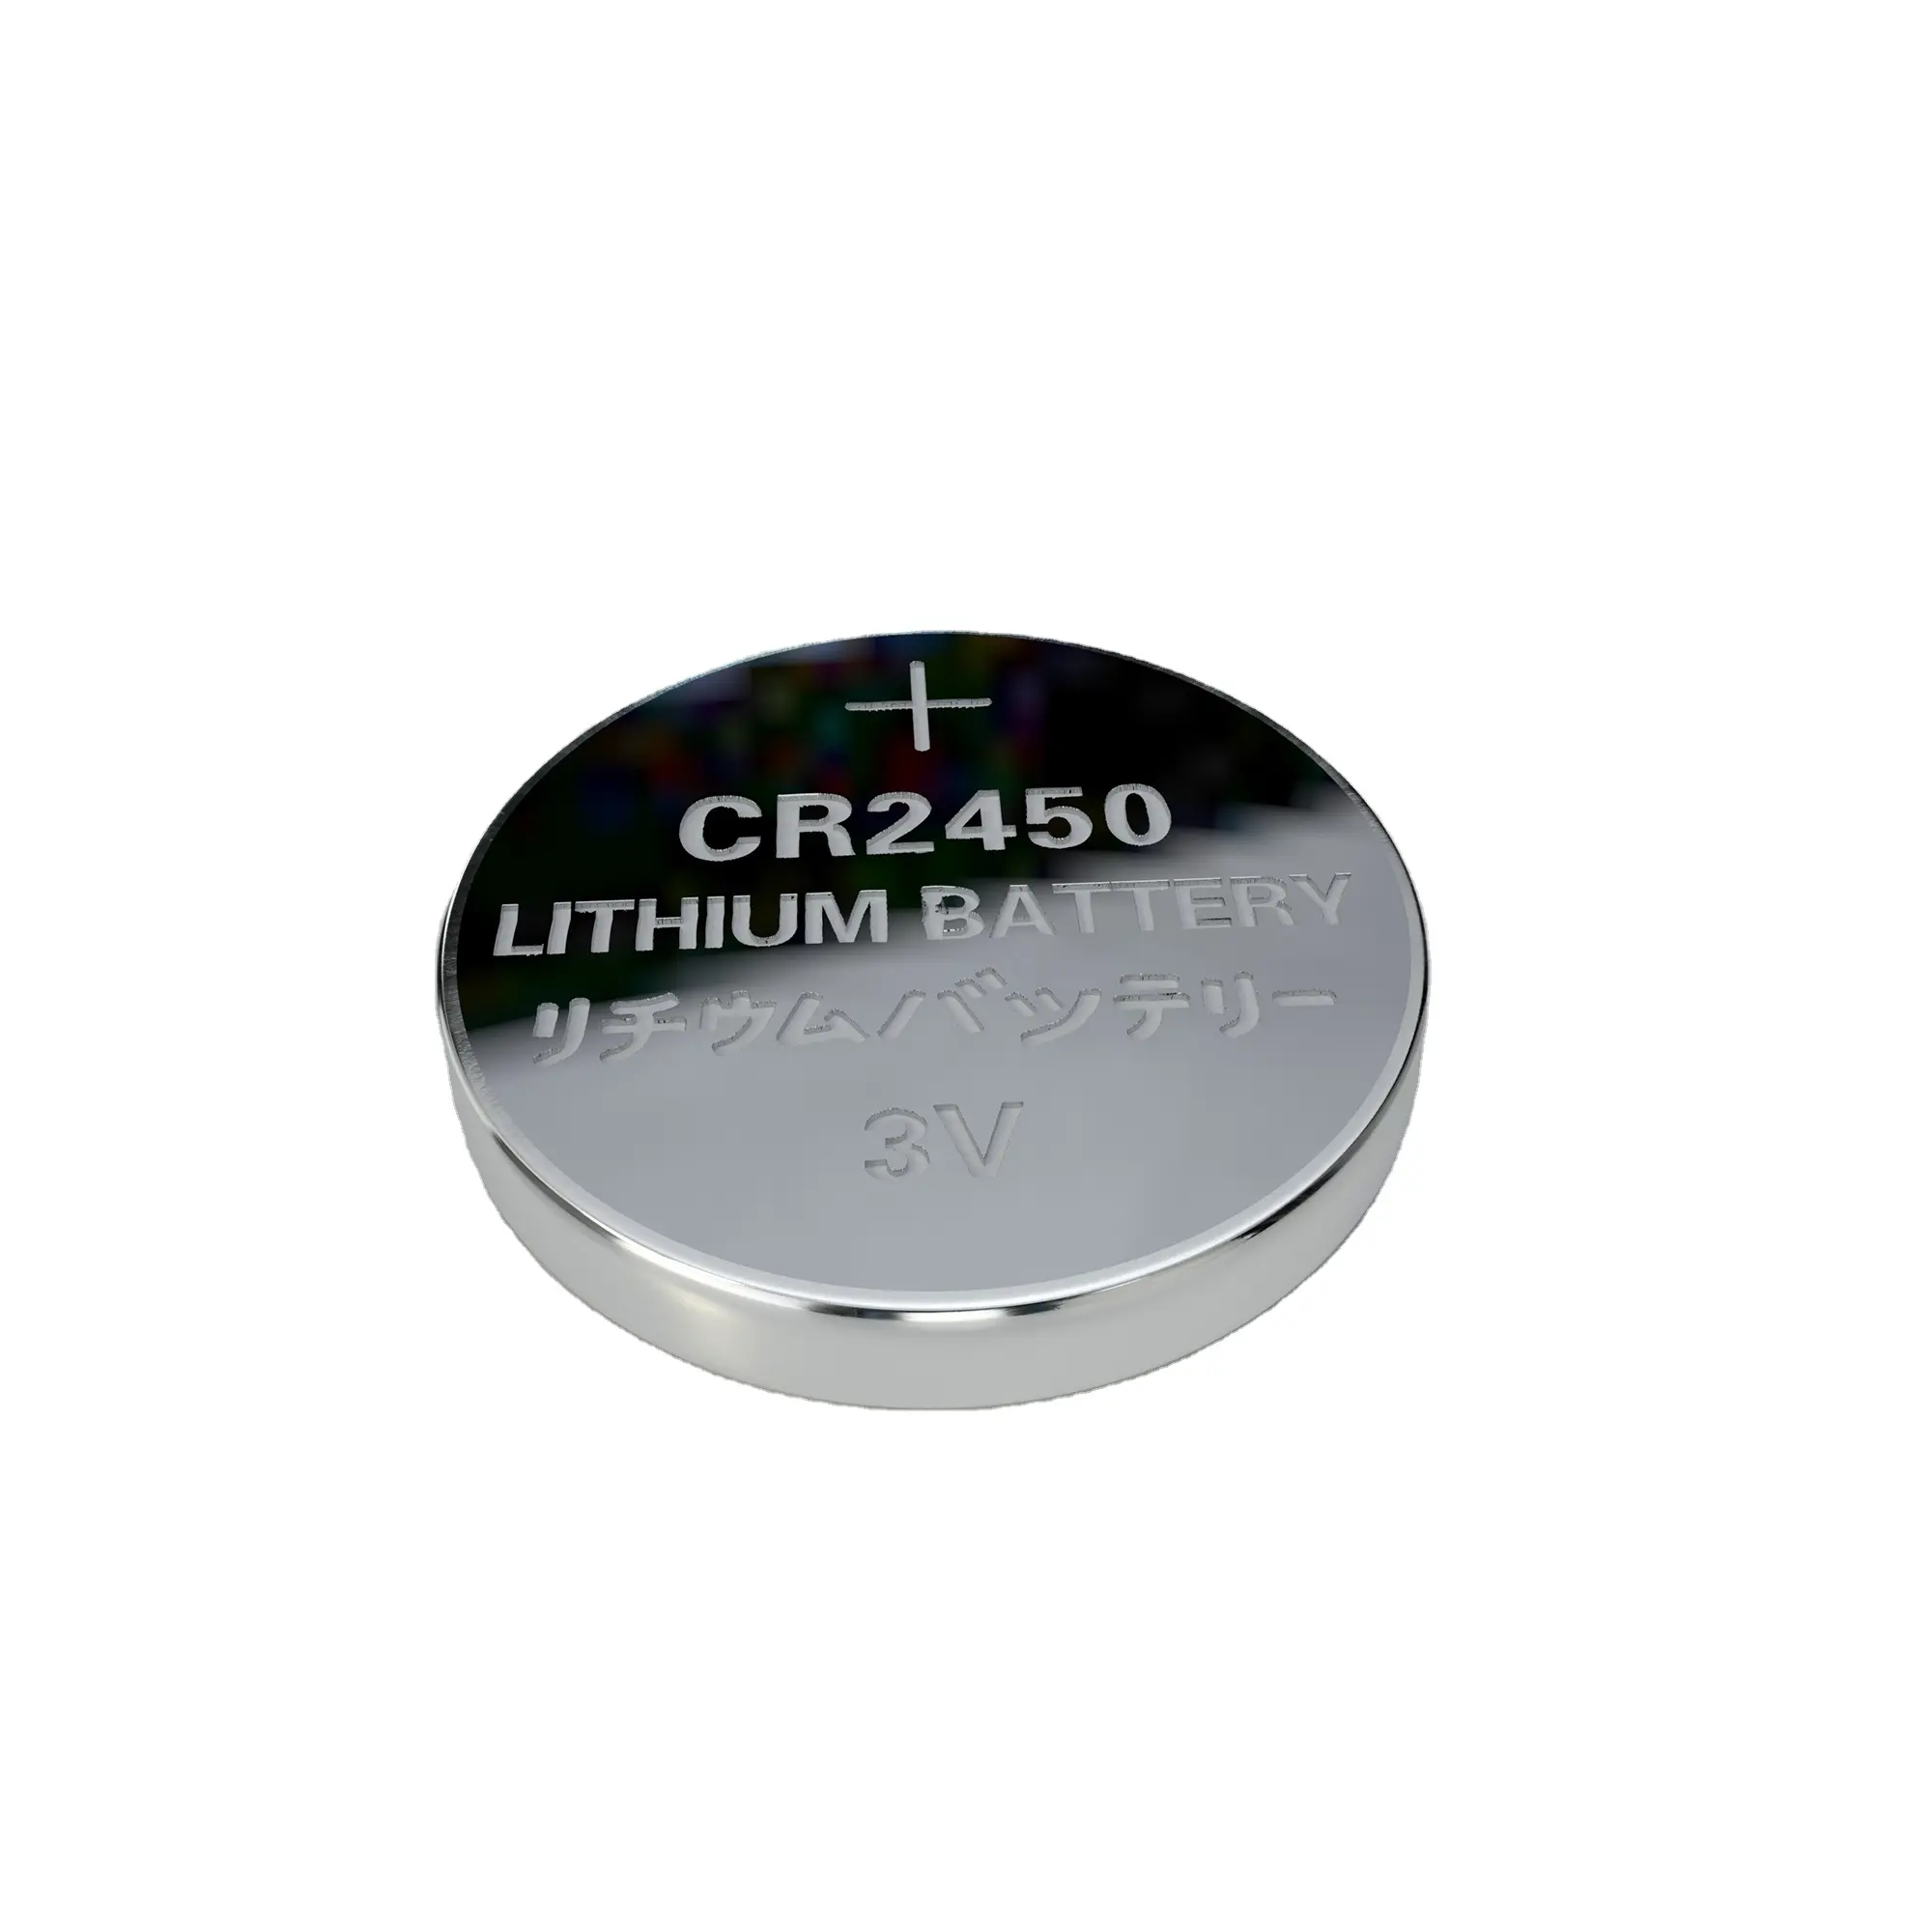 CROWN Y 3V CR2450ボタンセルリチウム電池大容量CR24503V 600mAh車のキー用リチウムイオン電池